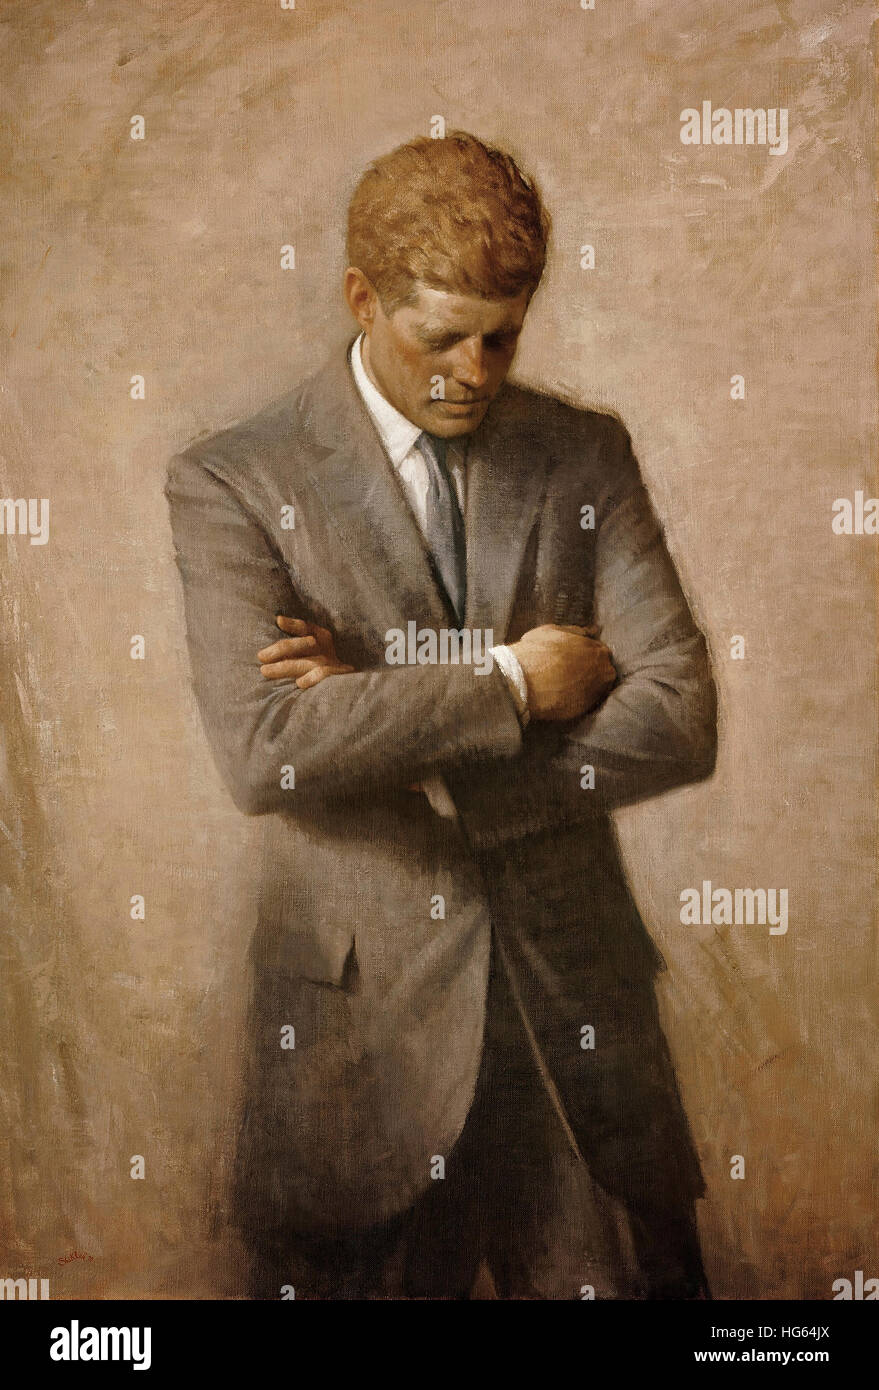 Portrait painting of President John Fitzgerald Kennedy. Stock Photo